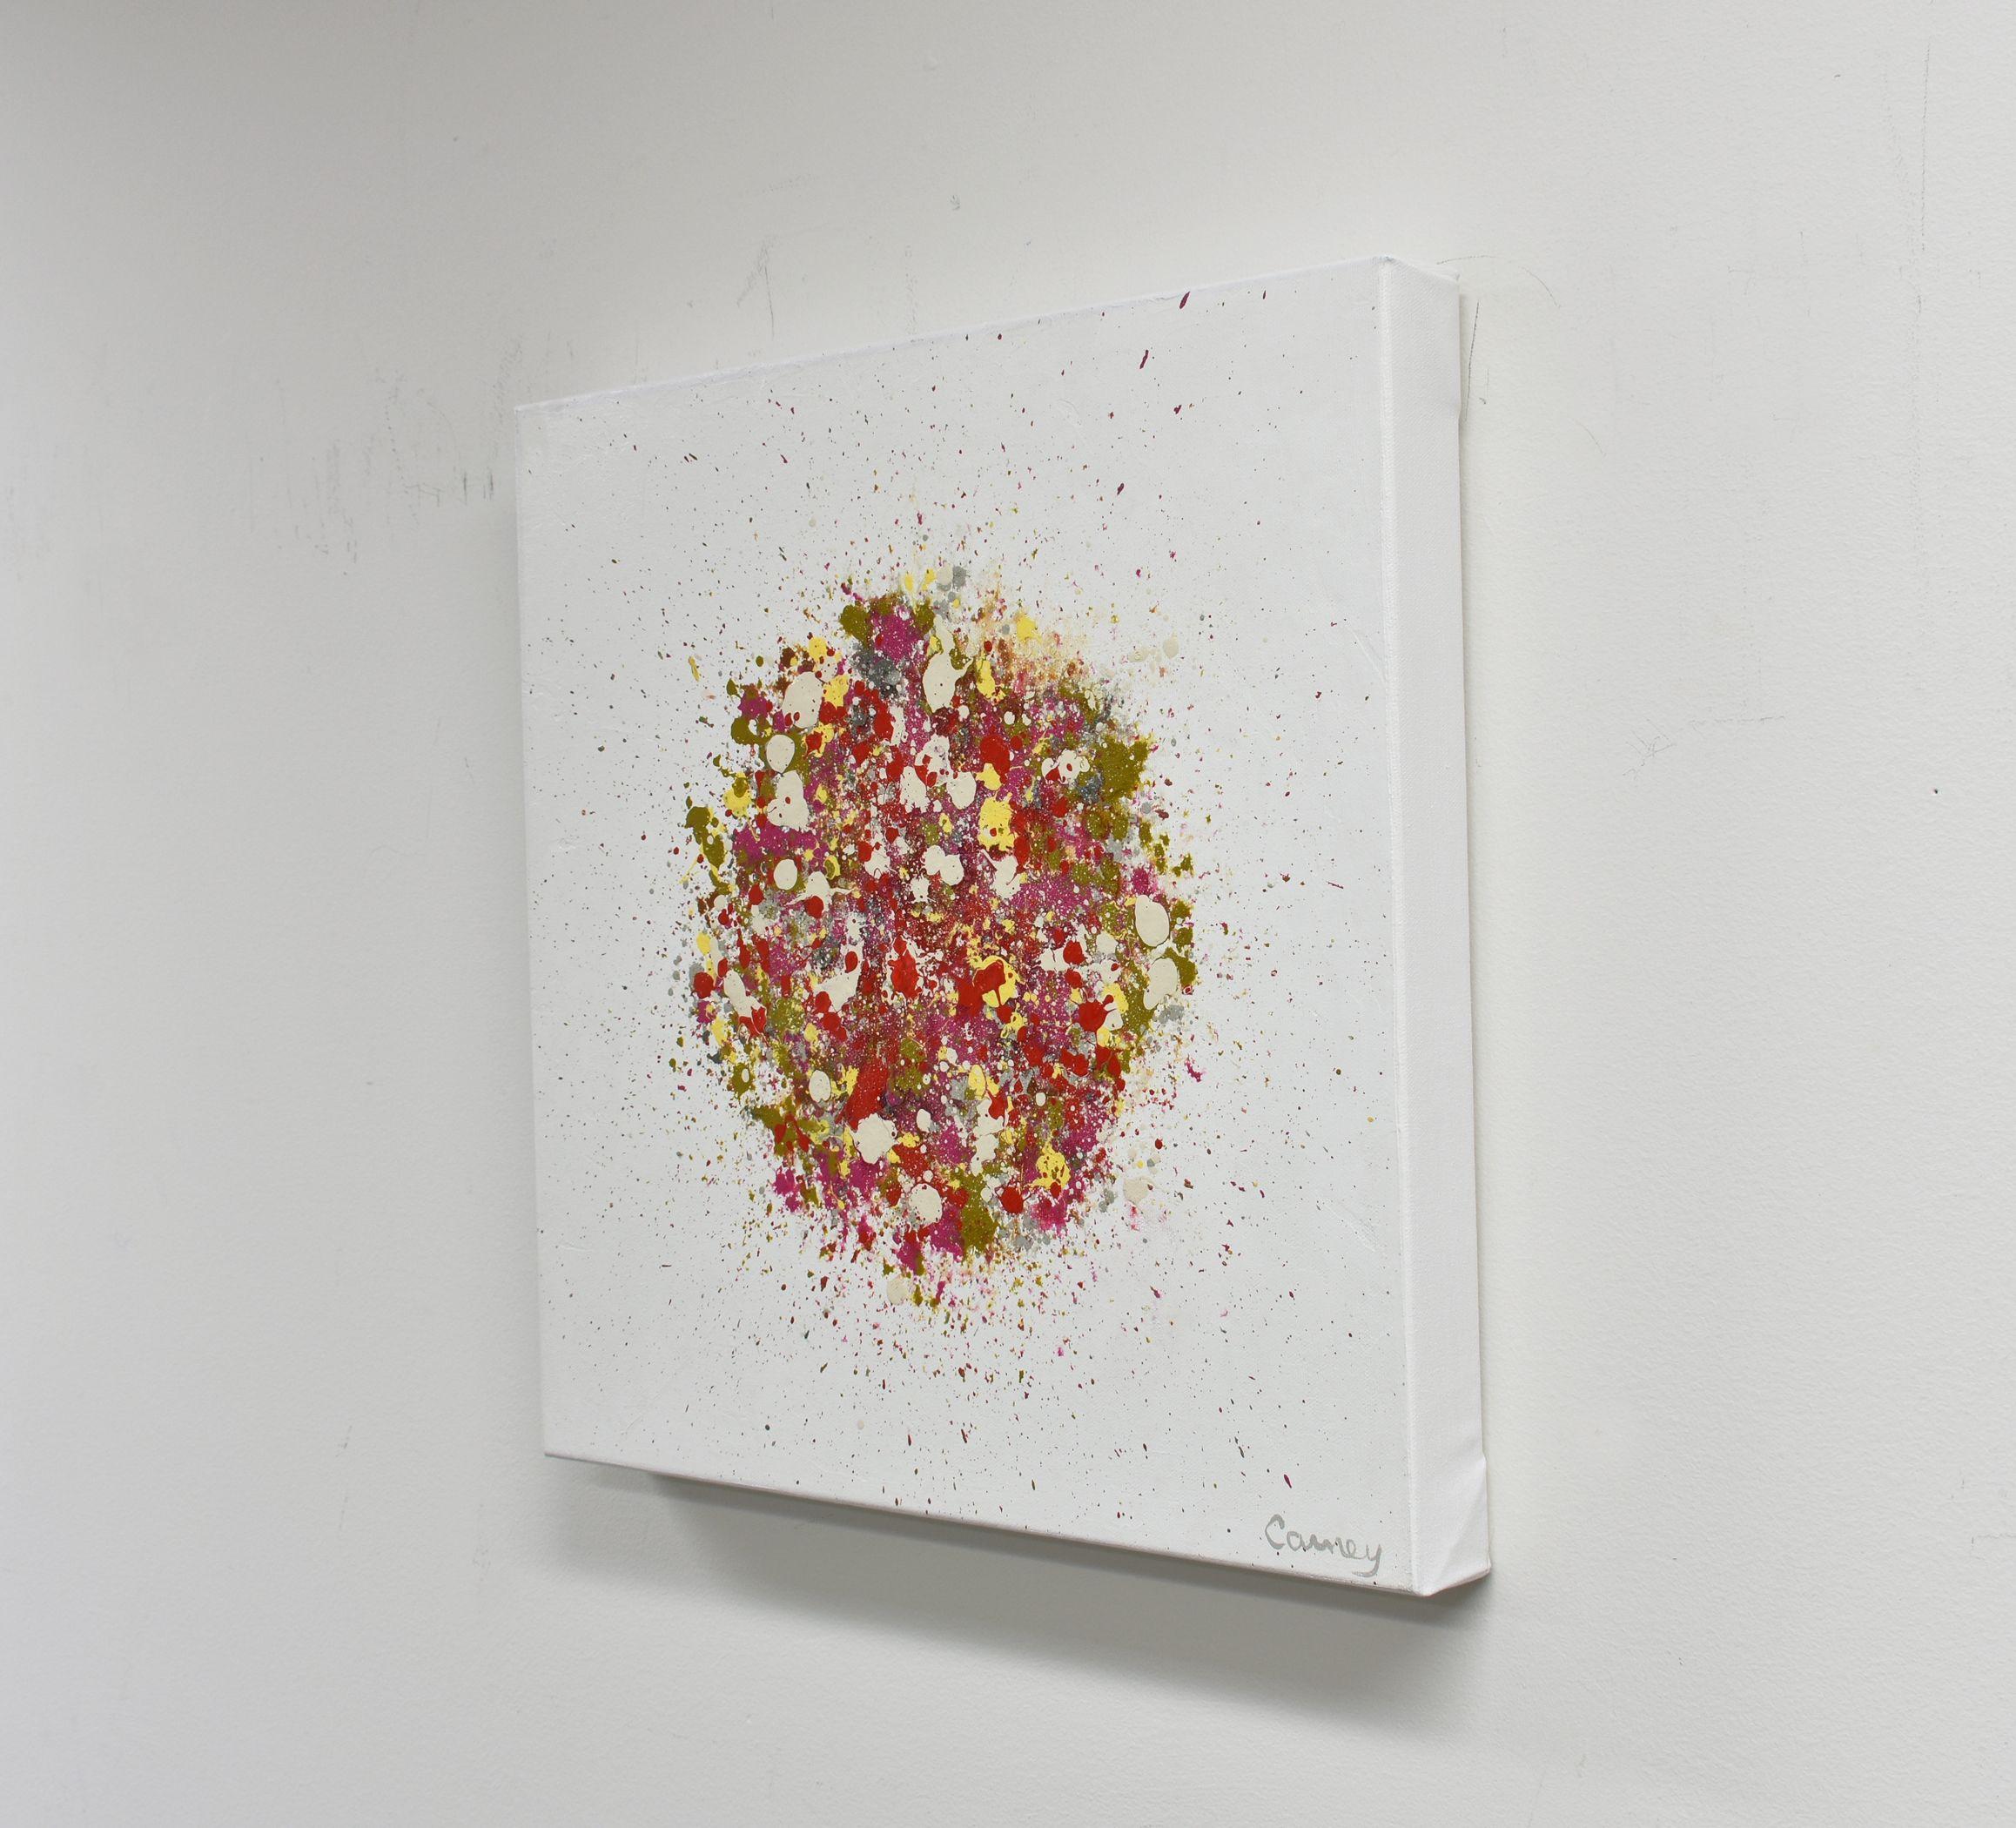 â€œPetal Burst 24â€ is a mid-size abstract painting in acrylic on canvas. Red, pink, yellow, ochre and gray were carefully dripped on a textured white background. It is part of the 